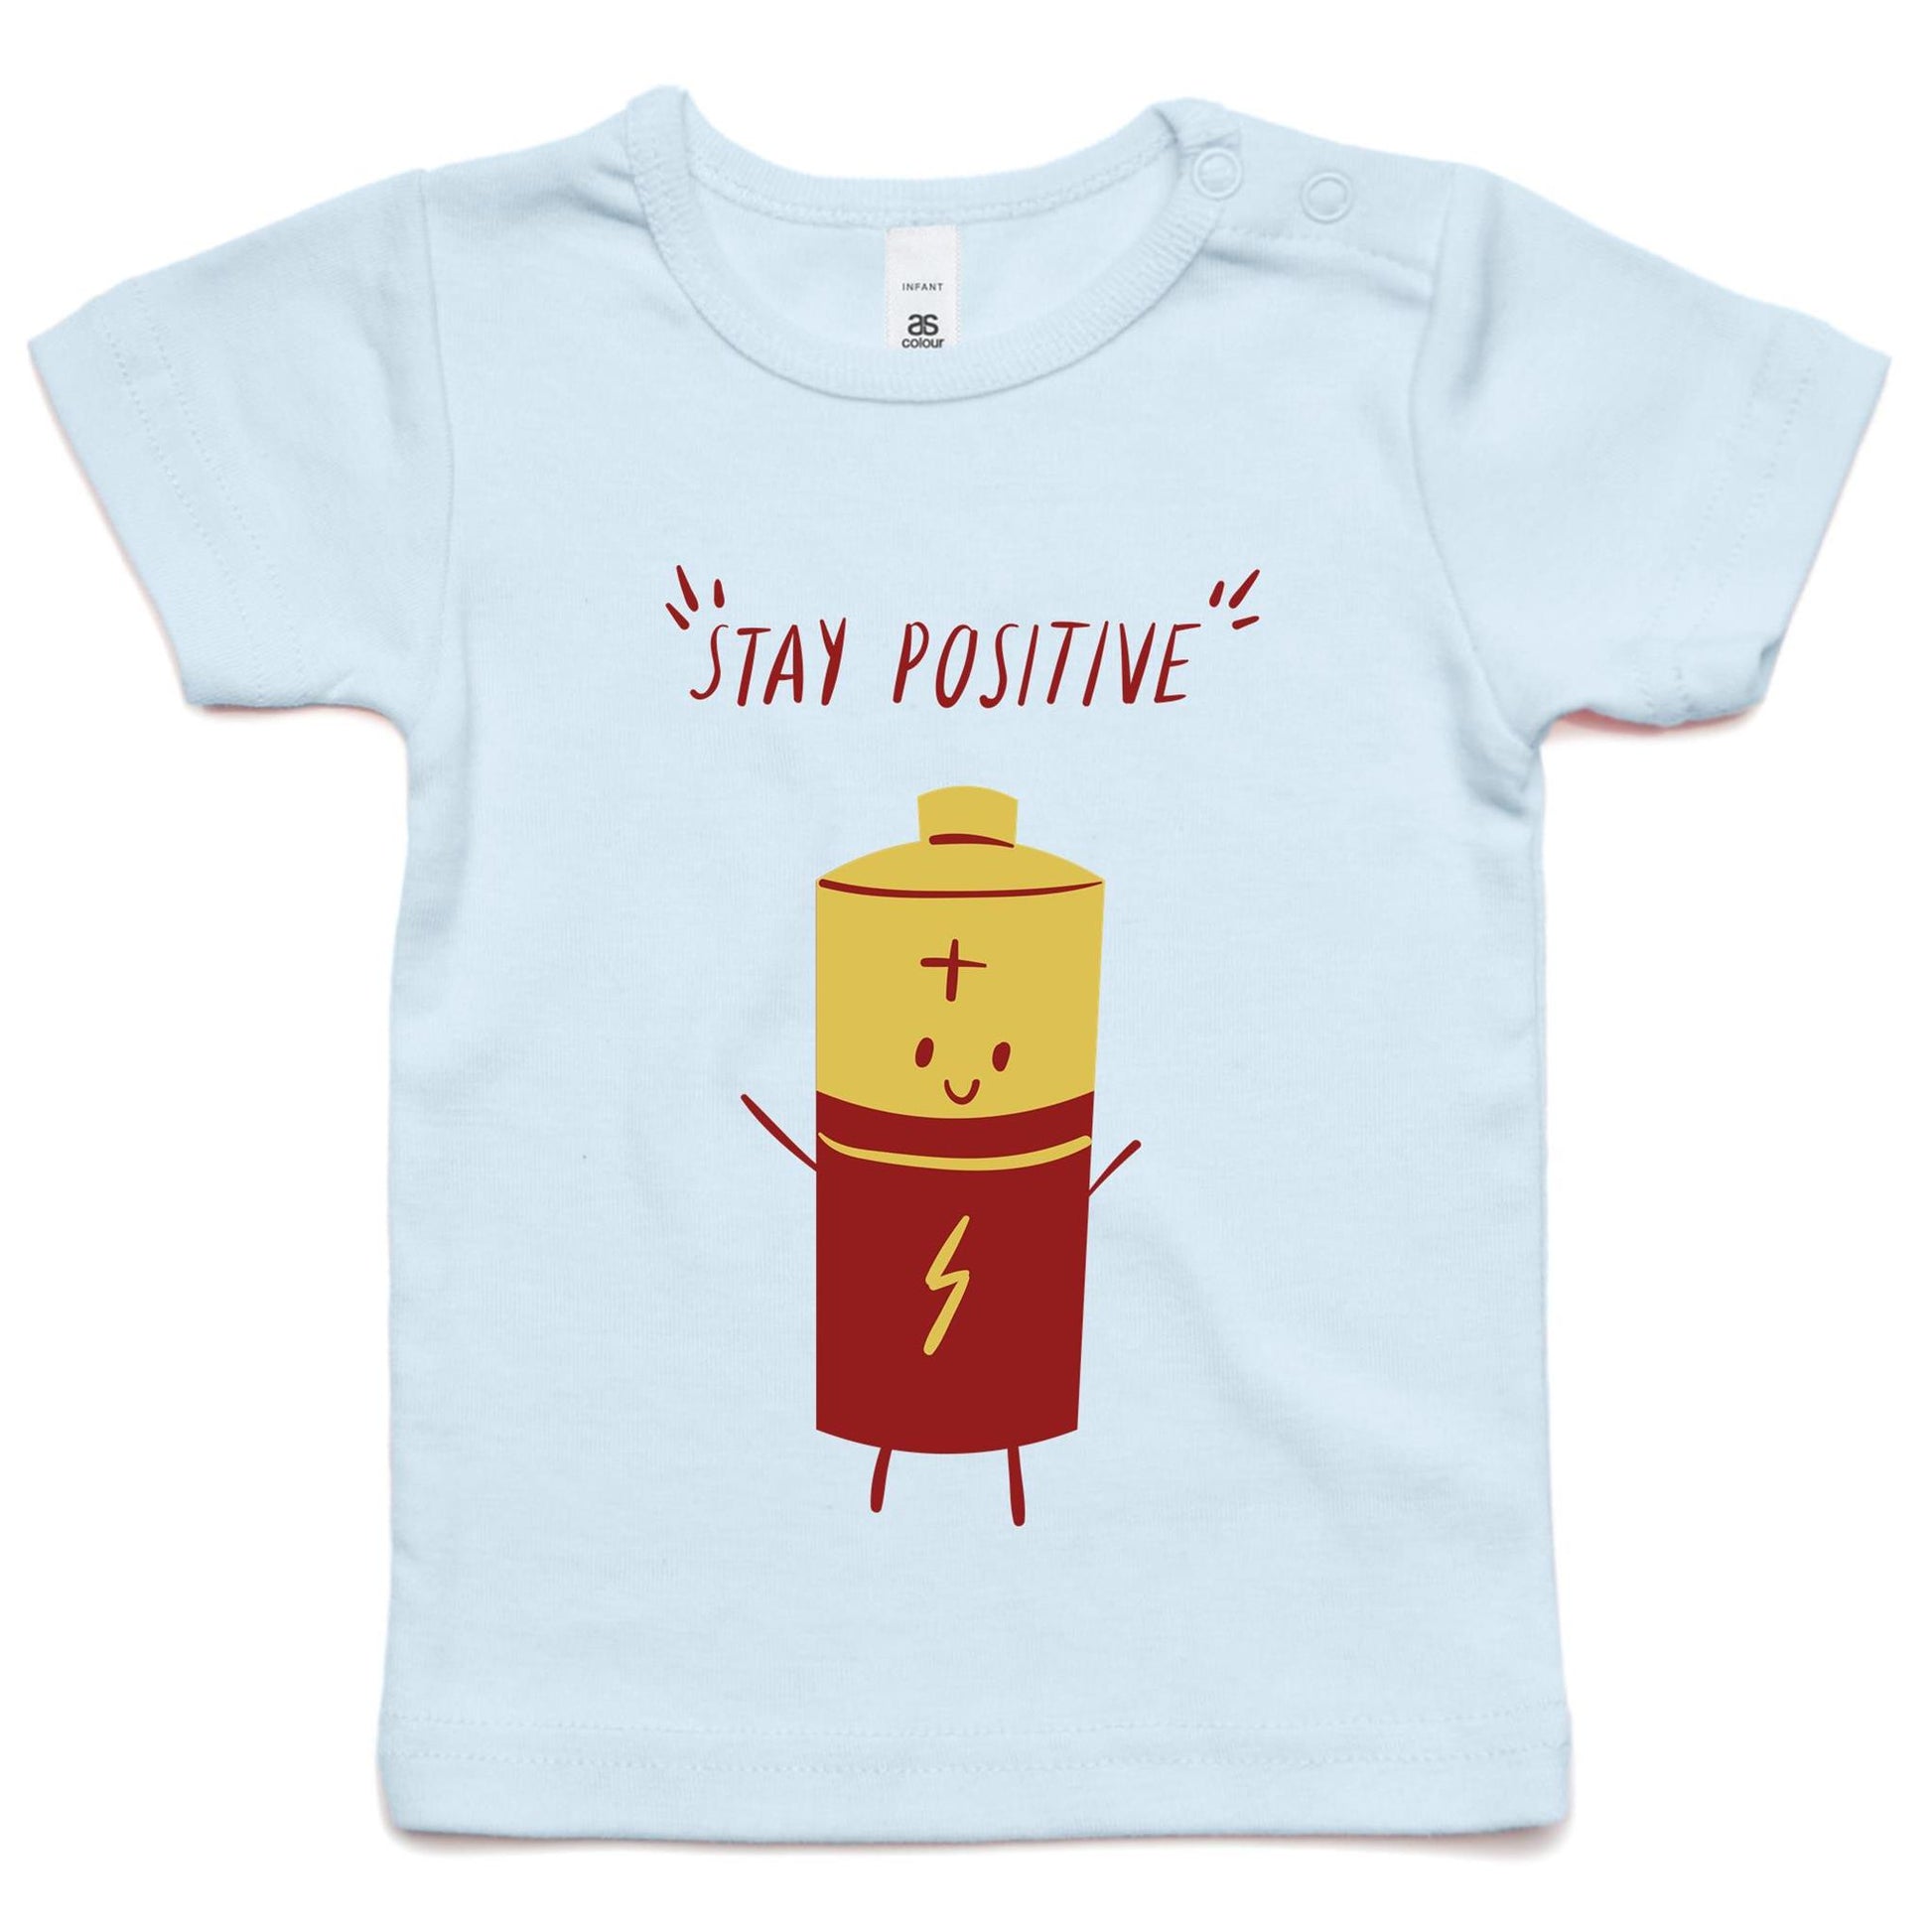 Stay Positive - Baby T-shirt Powder Blue Baby T-shirt kids